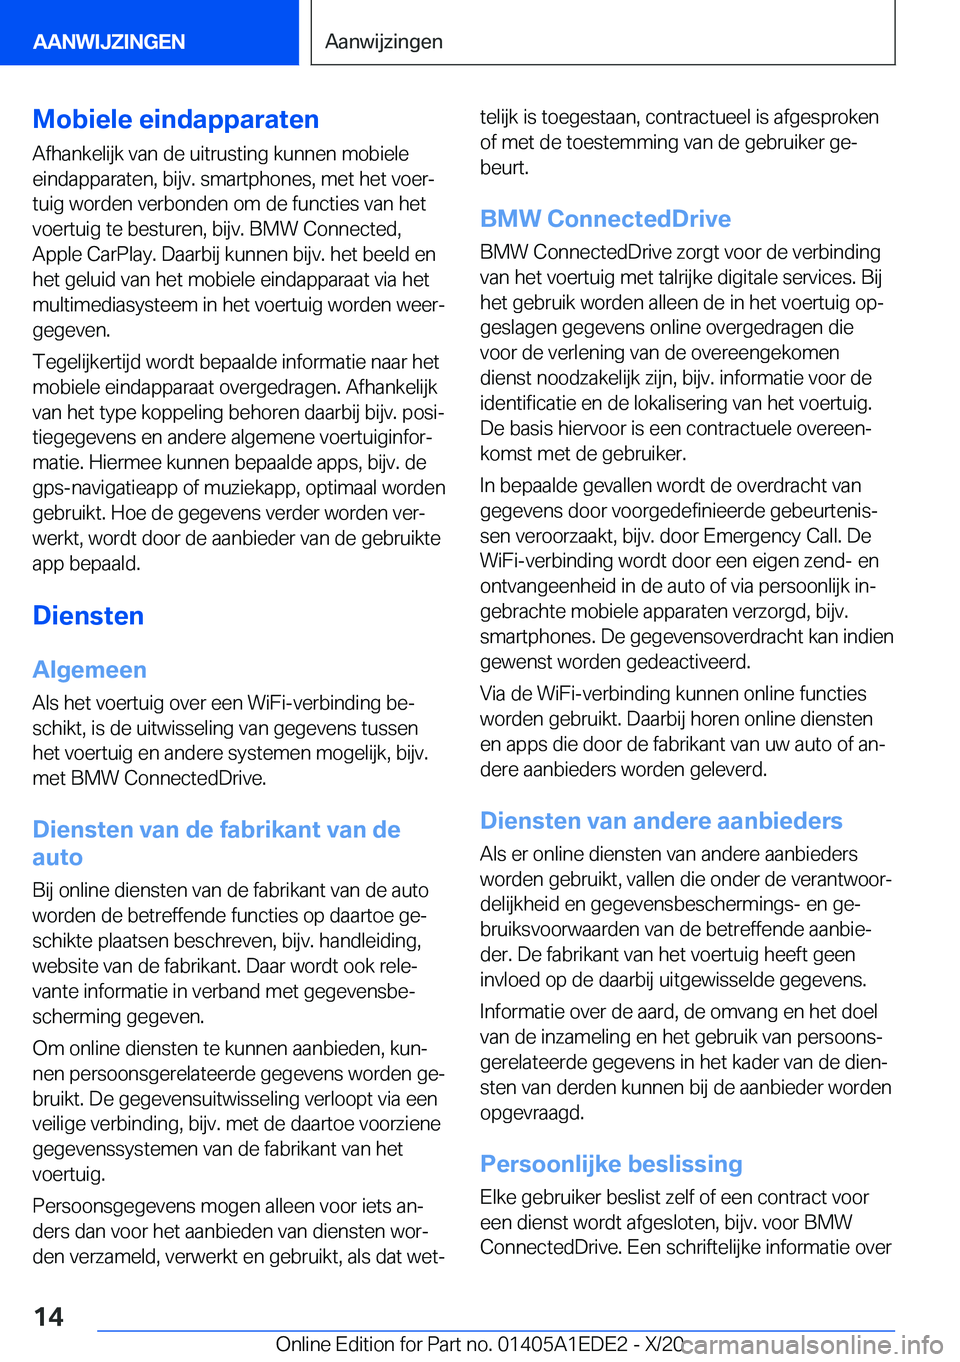 BMW 8 SERIES CONVERTIBLE 2021  Instructieboekjes (in Dutch) �M�o�b�i�e�l�e��e�i�n�d�a�p�p�a�r�a�t�e�n
�A�f�h�a�n�k�e�l�i�j�k��v�a�n��d�e��u�i�t�r�u�s�t�i�n�g��k�u�n�n�e�n��m�o�b�i�e�l�e �e�i�n�d�a�p�p�a�r�a�t�e�n�,��b�i�j�v�.��s�m�a�r�t�p�h�o�n�e�s�,�